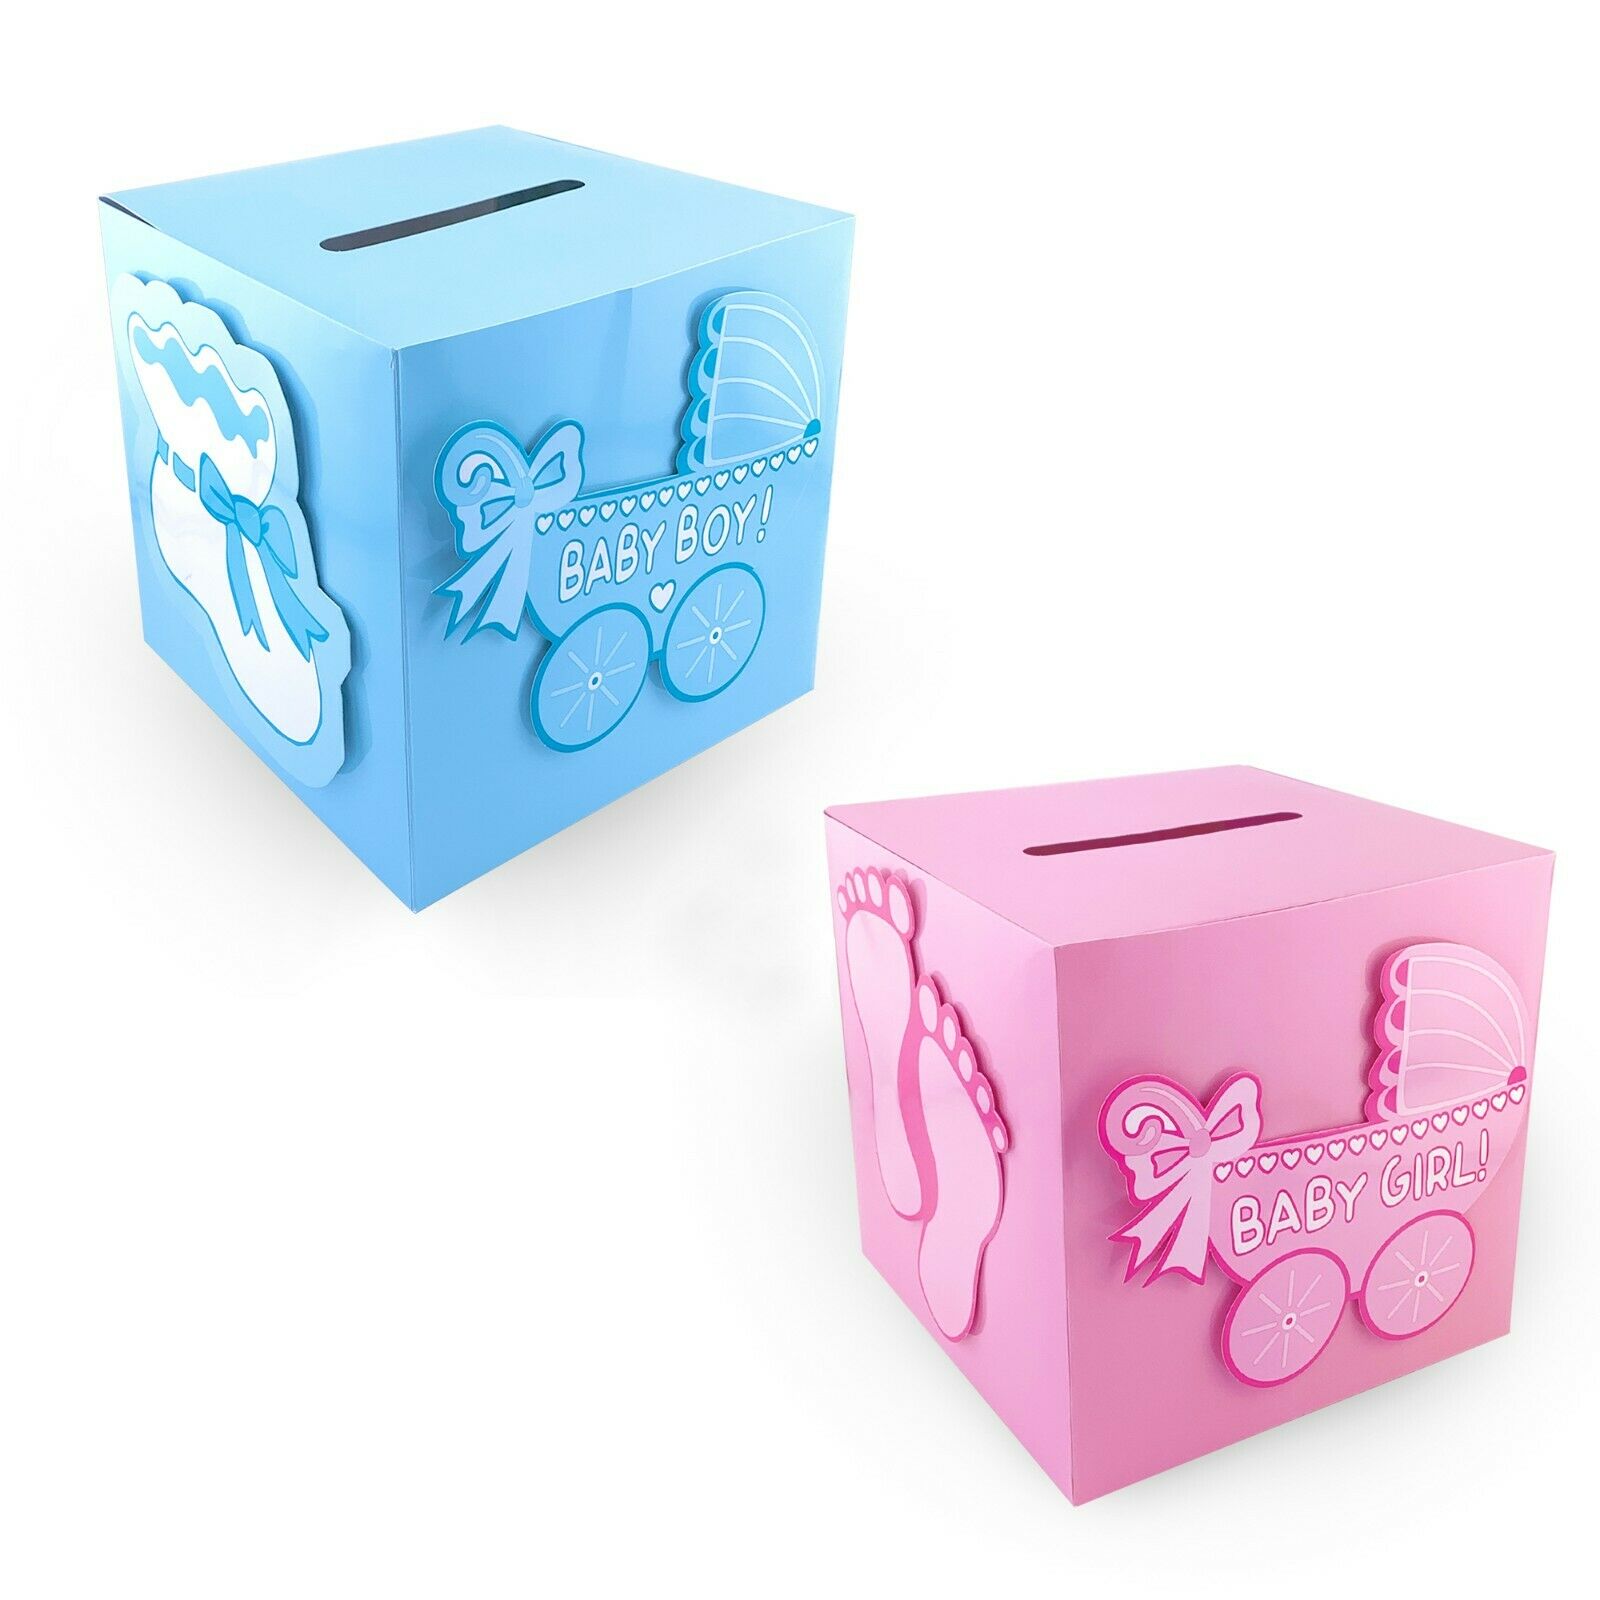 Baby Shower Carriage Cardboard Gift Card Wishing Well Boy Girl Decoration Box